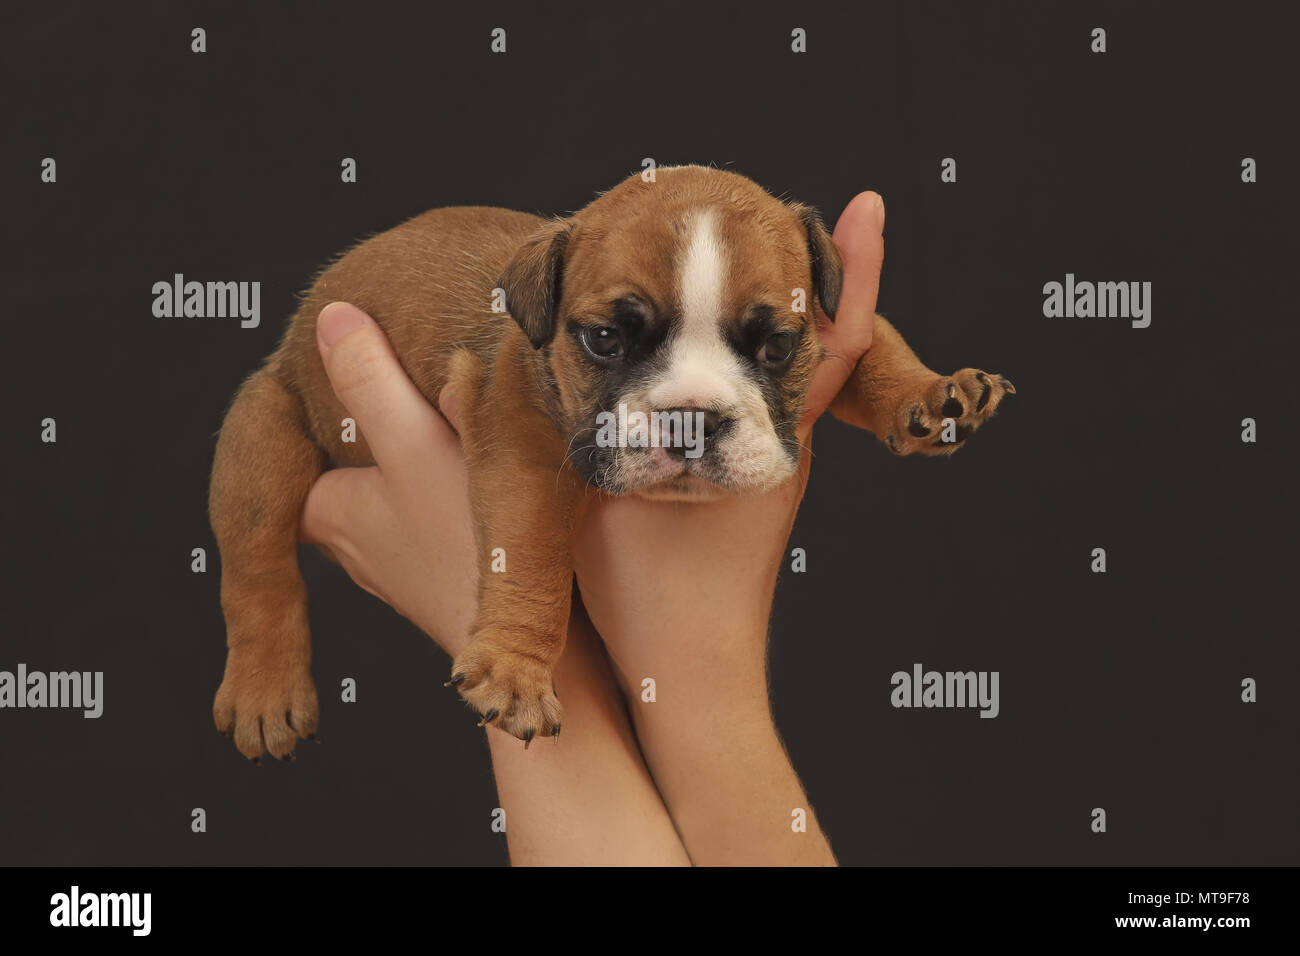 English Bulldog. Hands holding puppy (4 weeks old). Germany Stock Photo